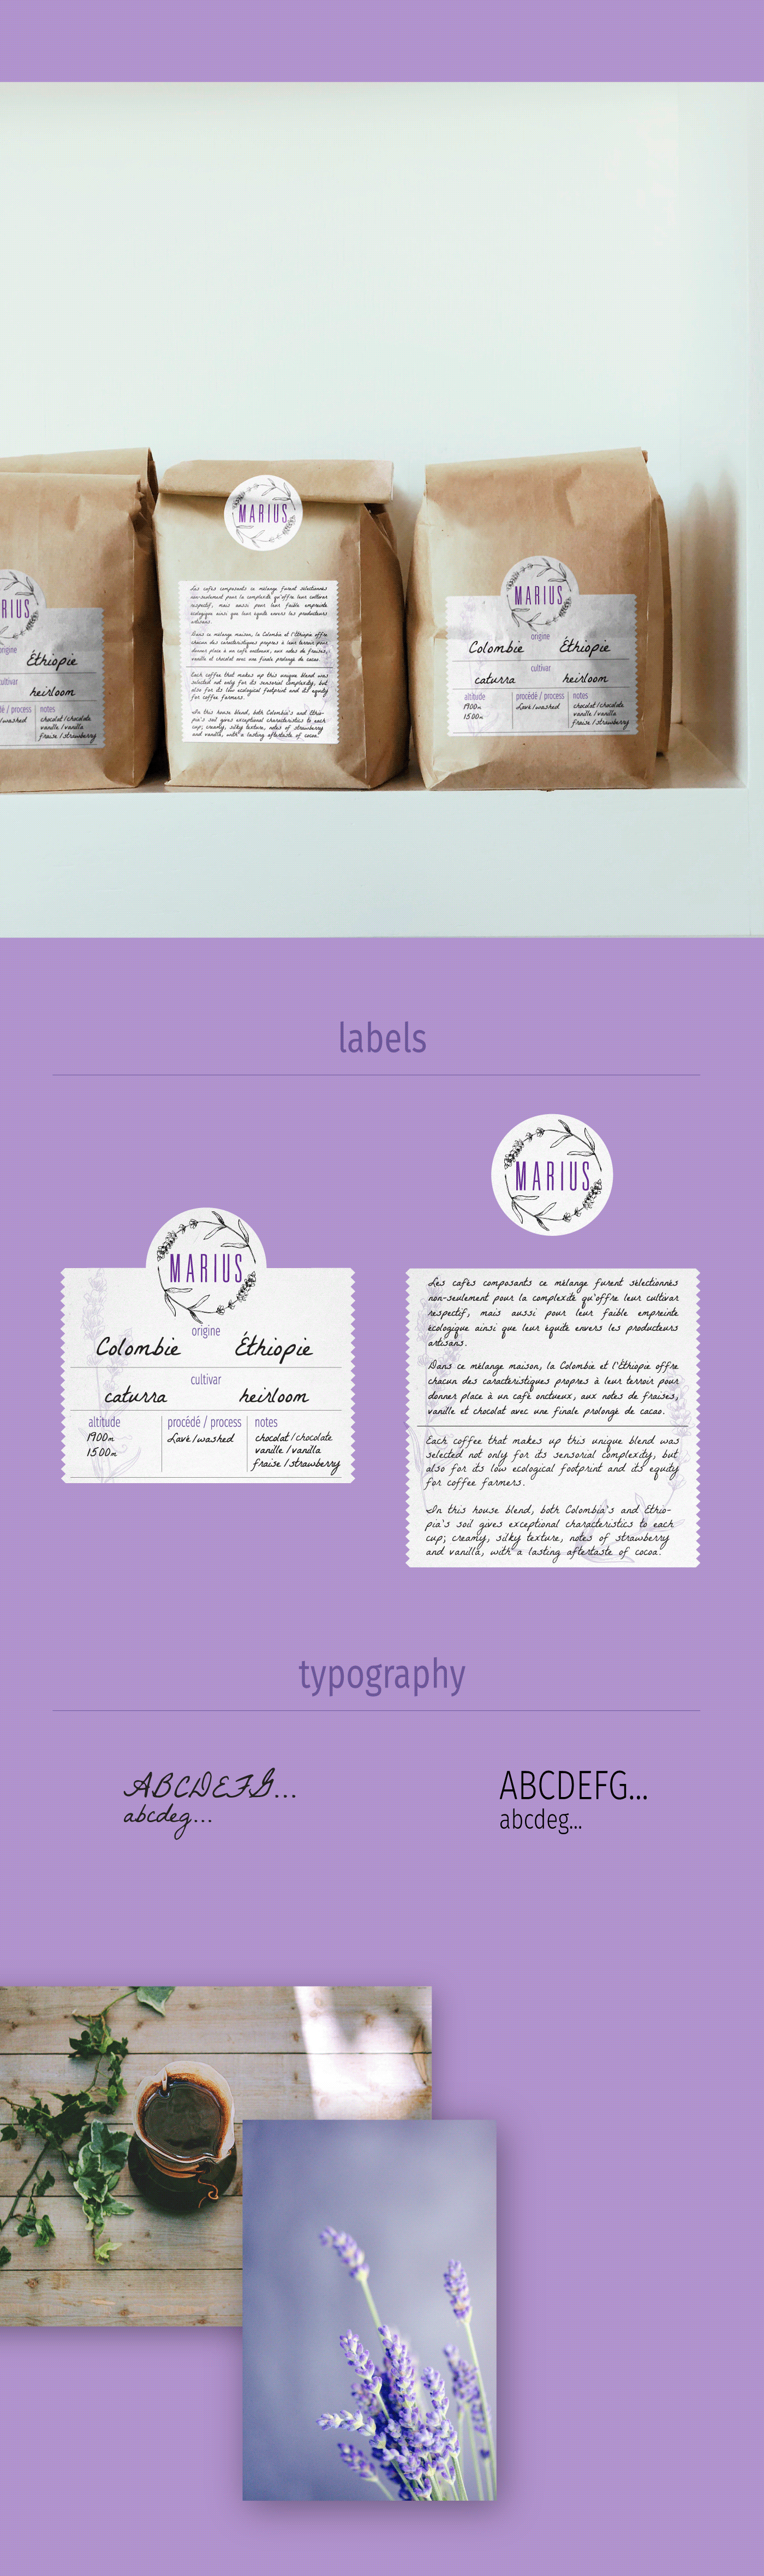 Label Coffee cafe lavender Provence design ILLUSTRATION  artisanal craft bio